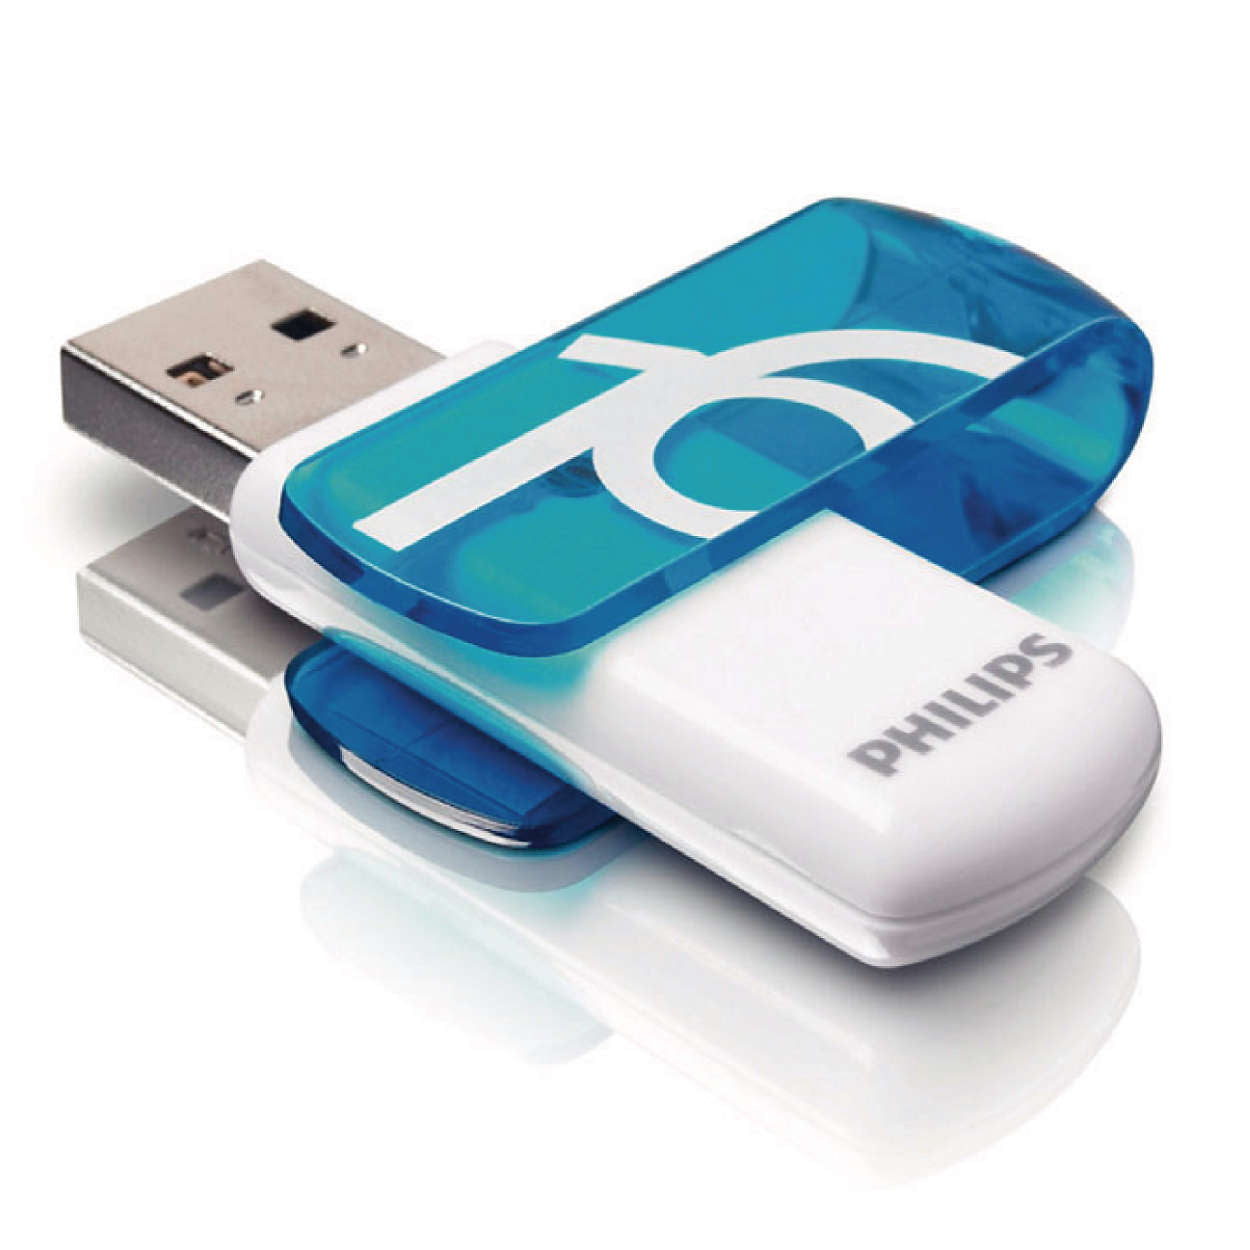 Philips FM16FD05B/00 USB 2.0 Flash Drive 16GB - Vivid Blue - Premium Memory / Storage from Philips - Just $7.99! Shop now at W Hurst & Son (IW) Ltd